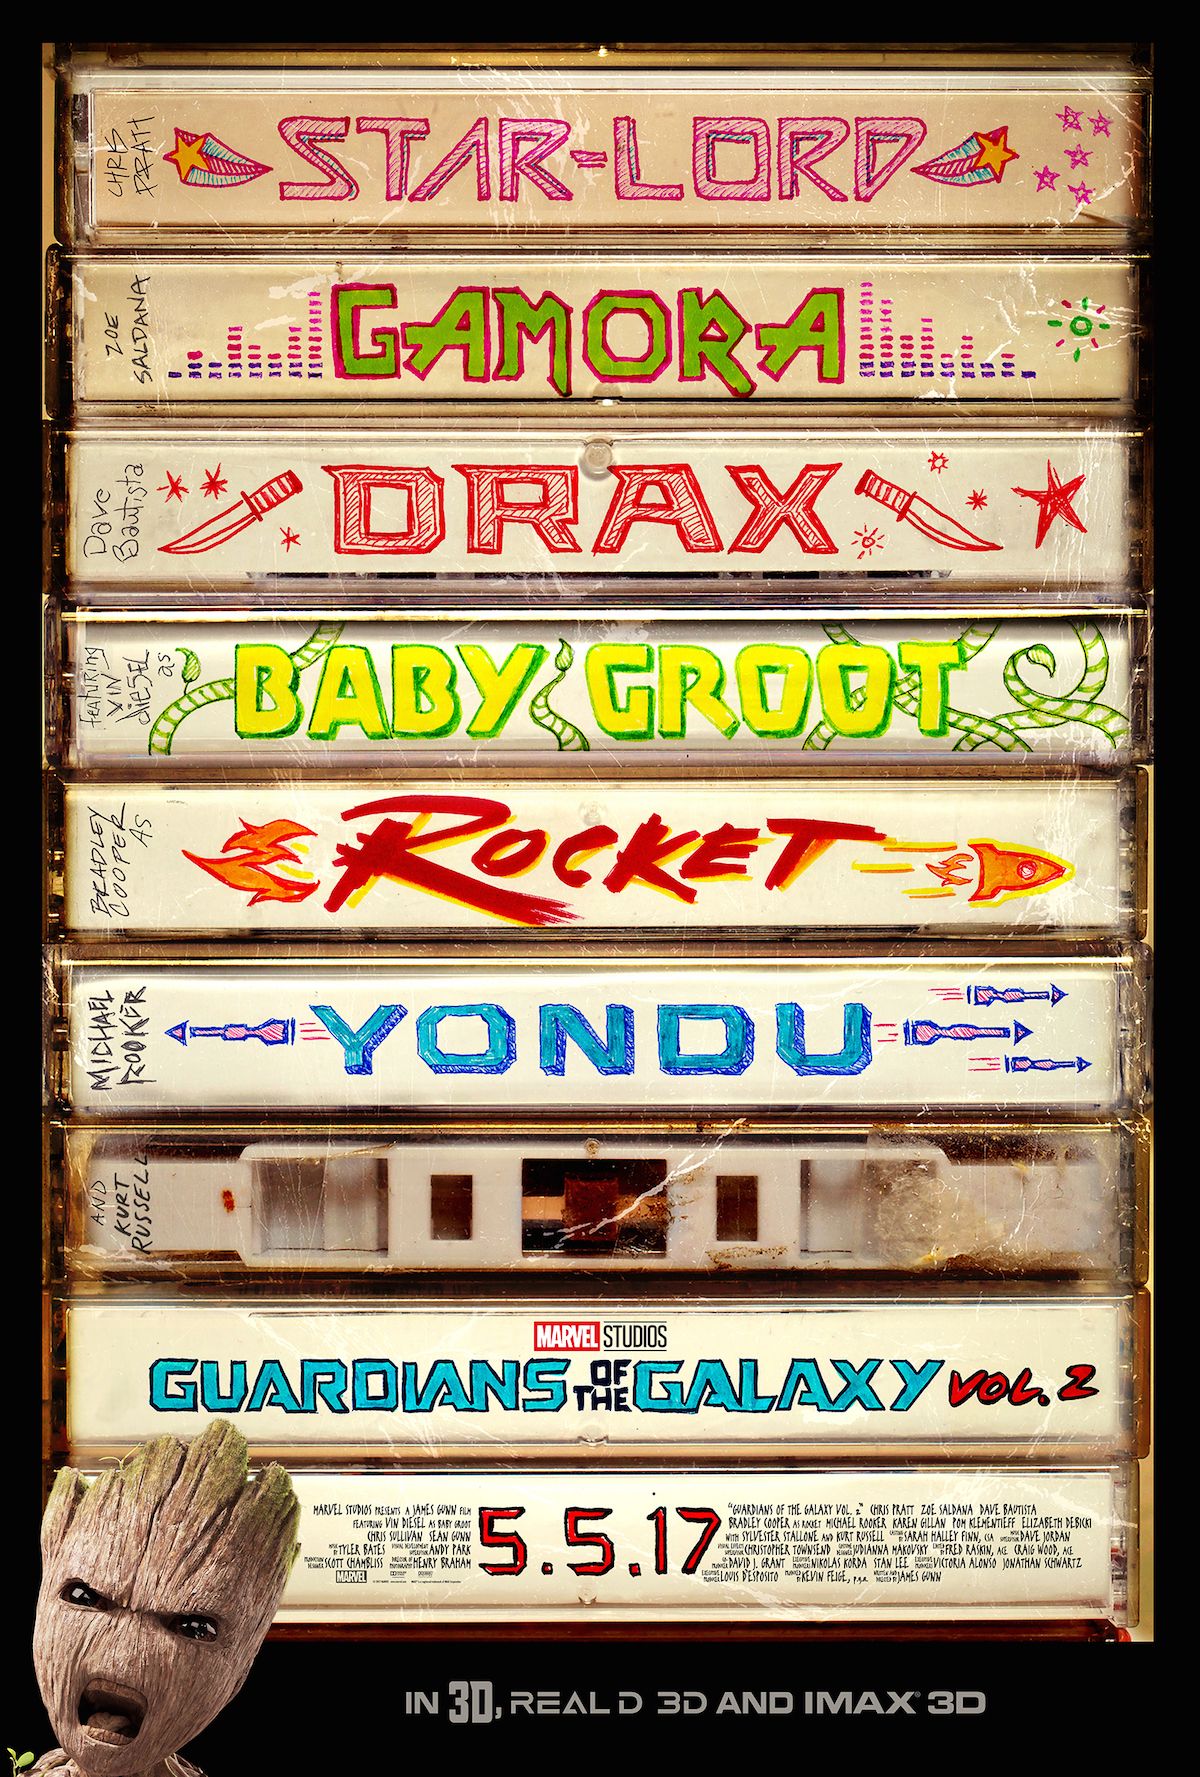 Guardians of the Galaxy Vol 2 mixtape poster